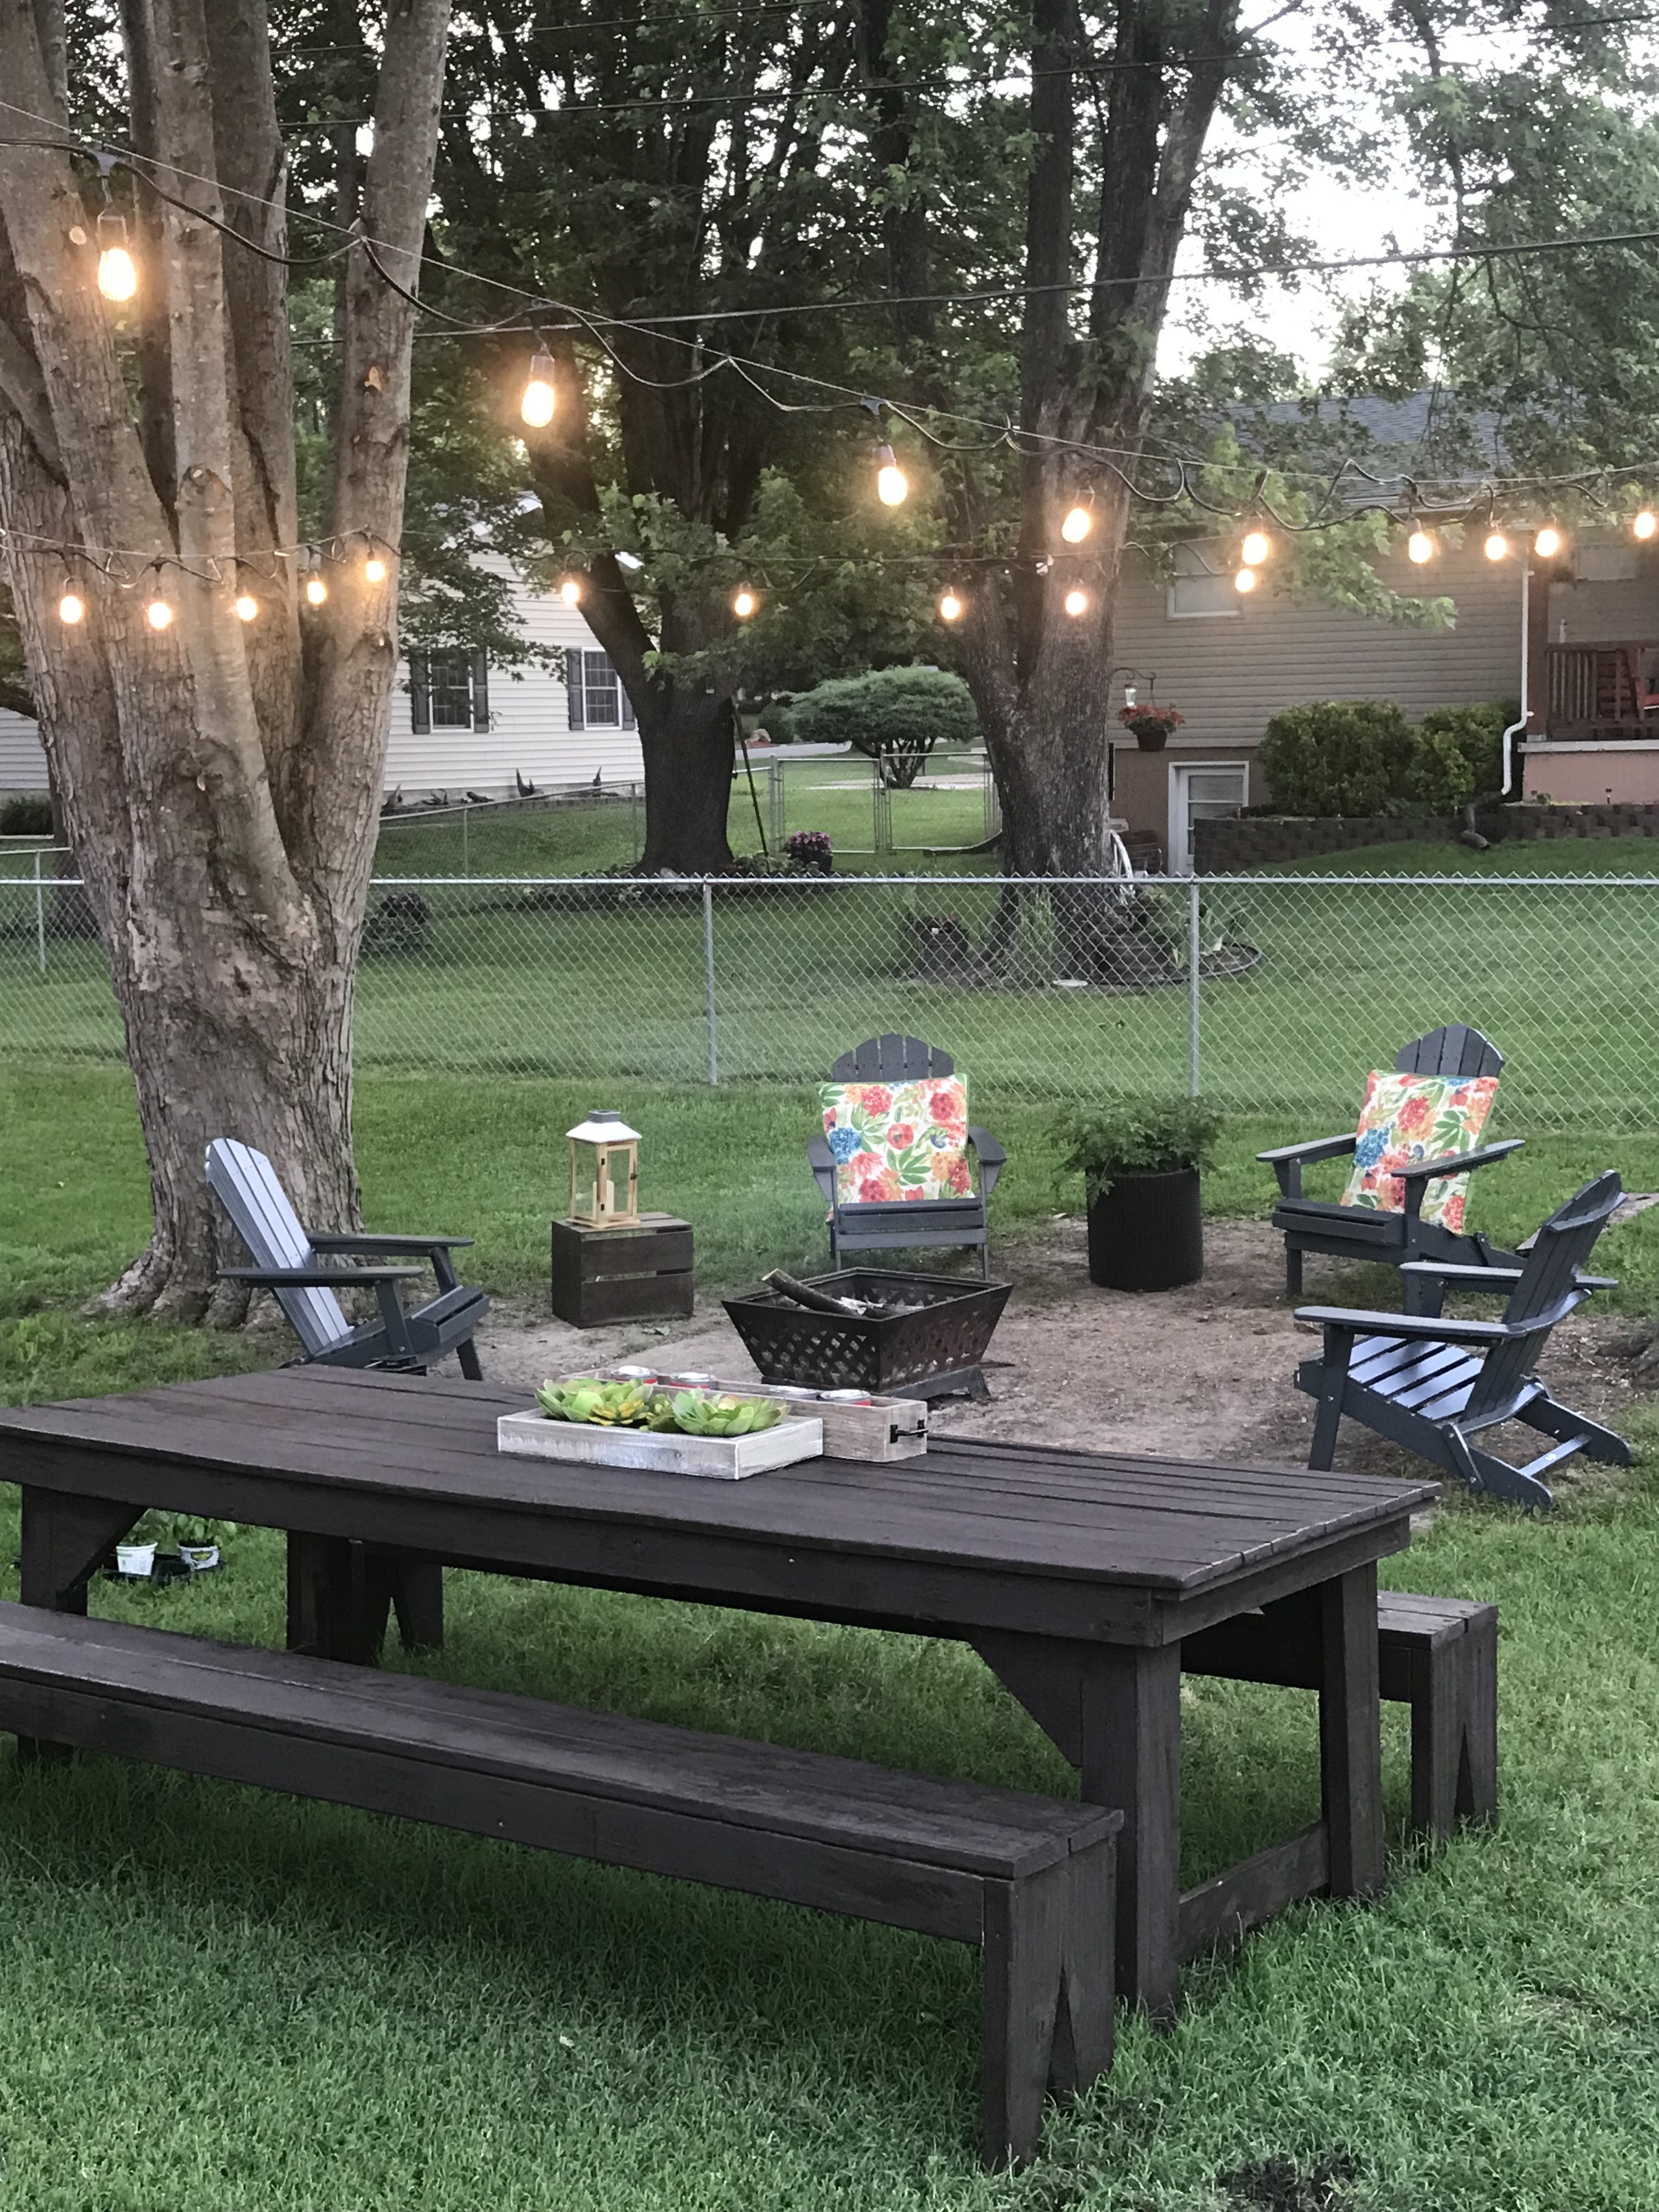 How to hang outdoor string lights | Backyard DIY Ideas - A ...